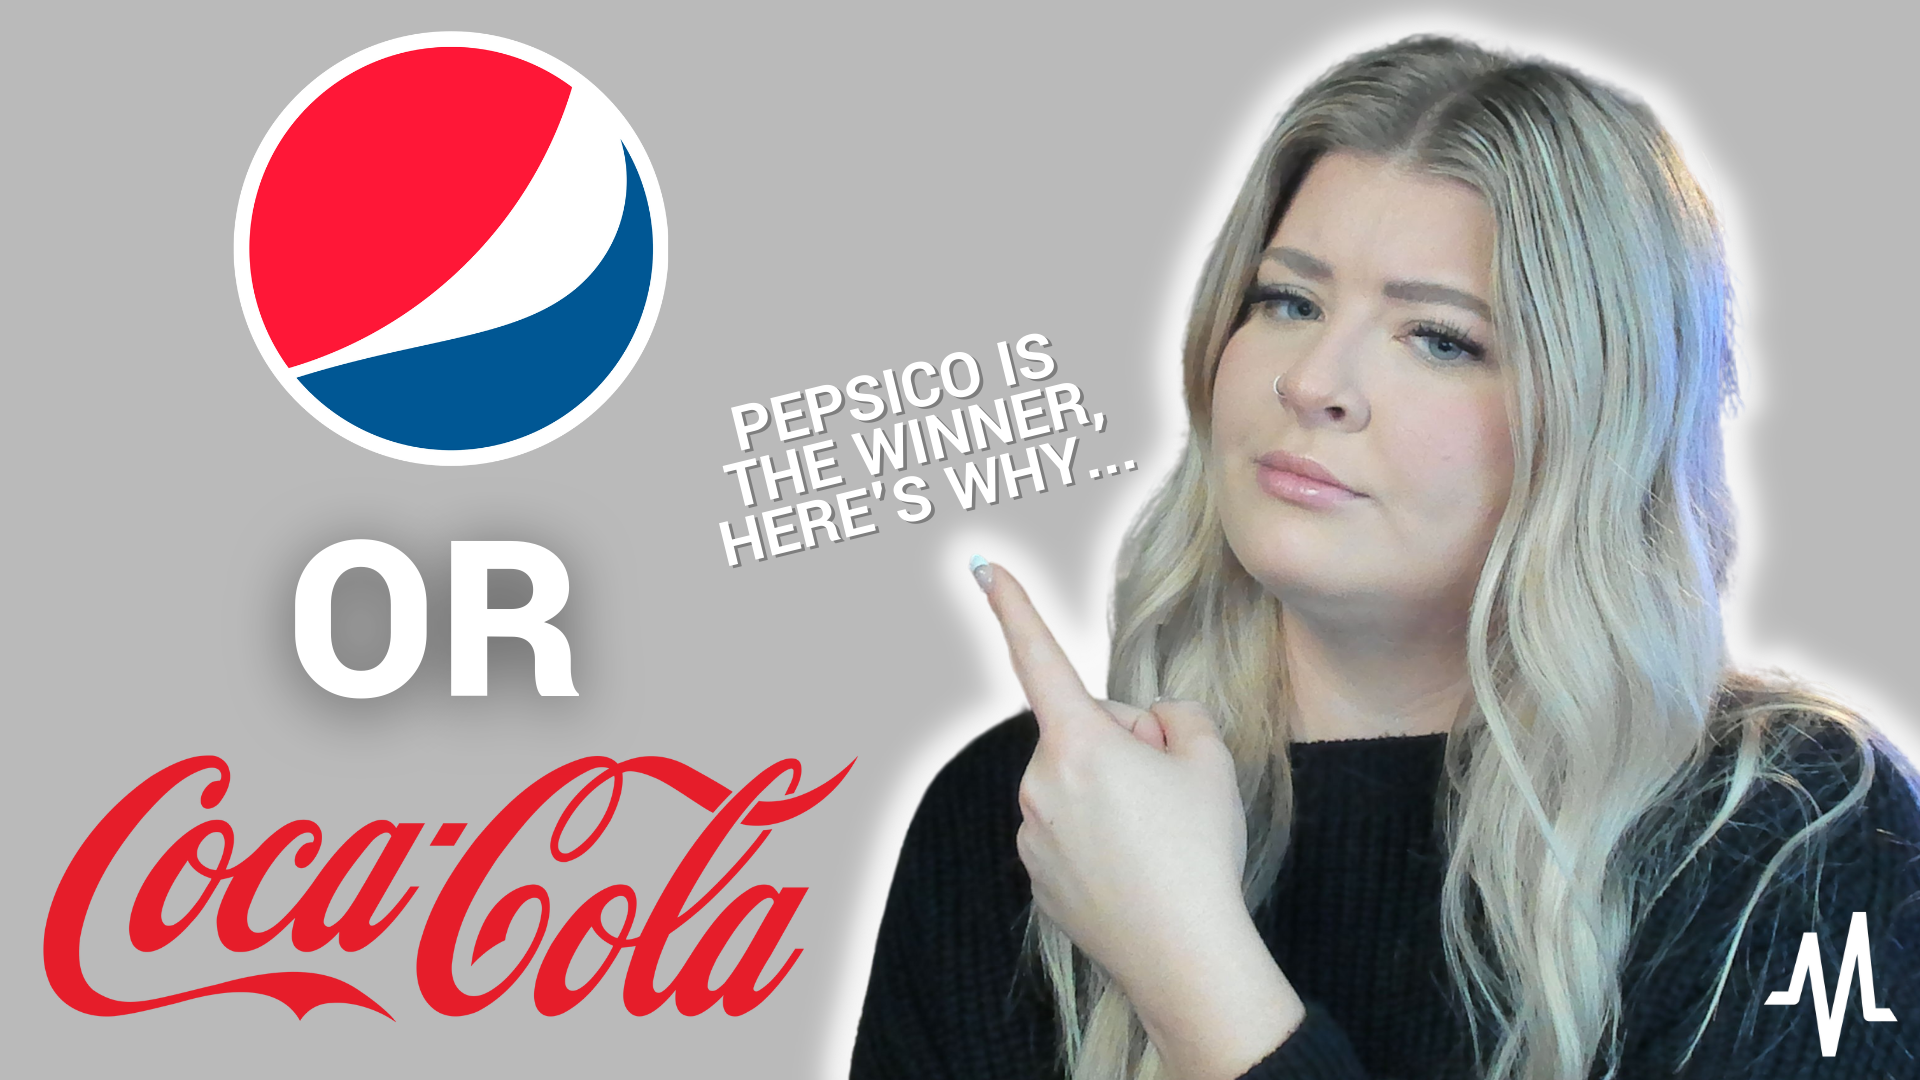 PepsiCo or Coke? PepsiCo is the Winner, Here's Why